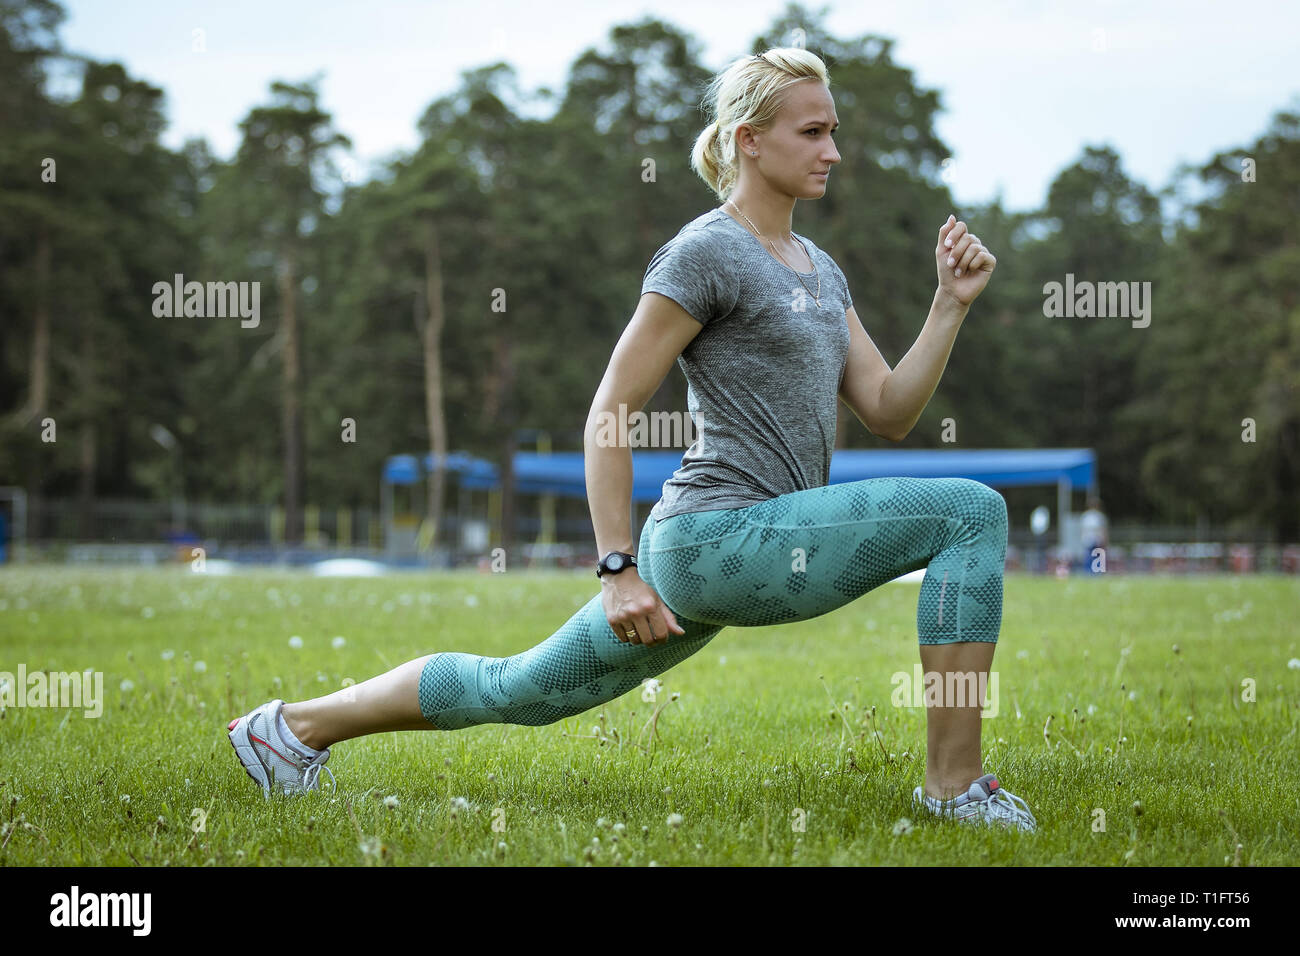 Sportlerin Übungen auf Füße im grünen Gras Feld Stockfoto